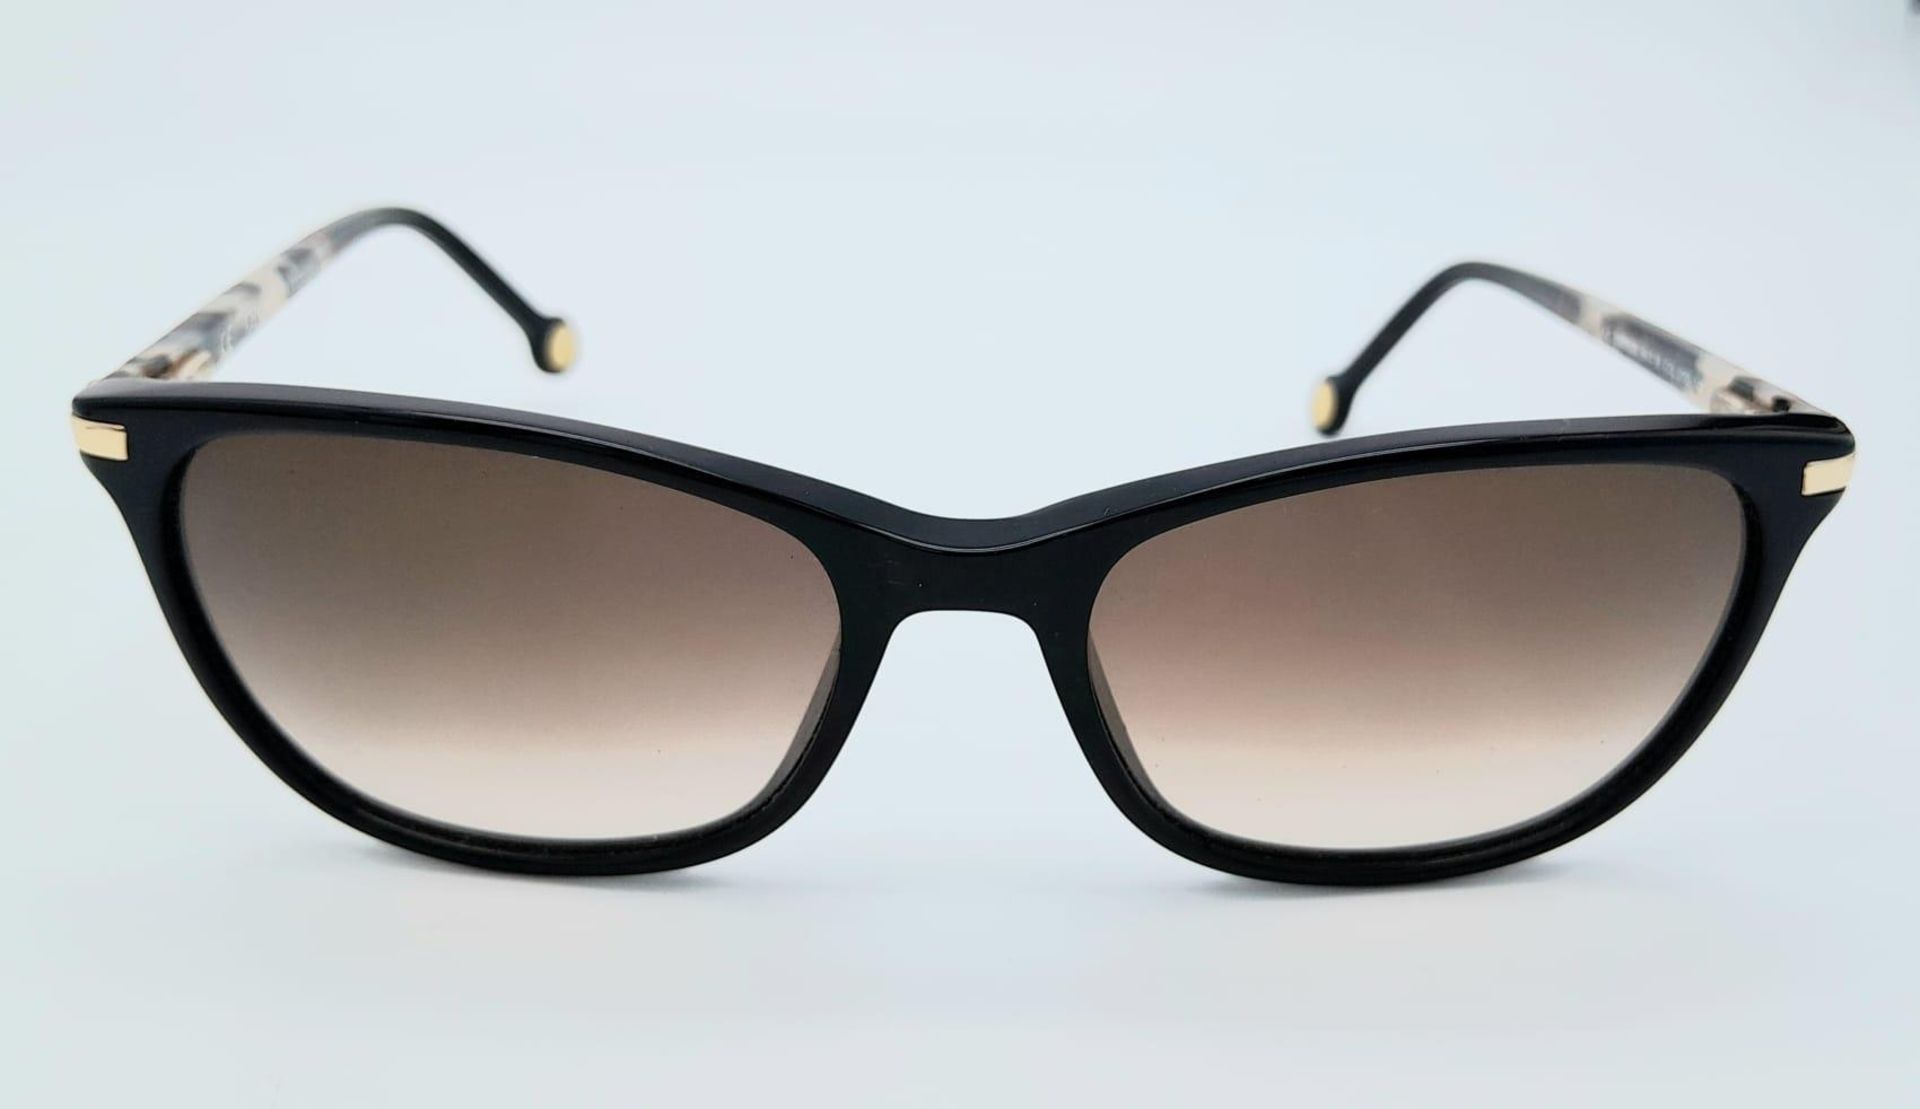 A Pair of Designer Carolina Herrera Sunglasses. Good condition. - Image 4 of 6